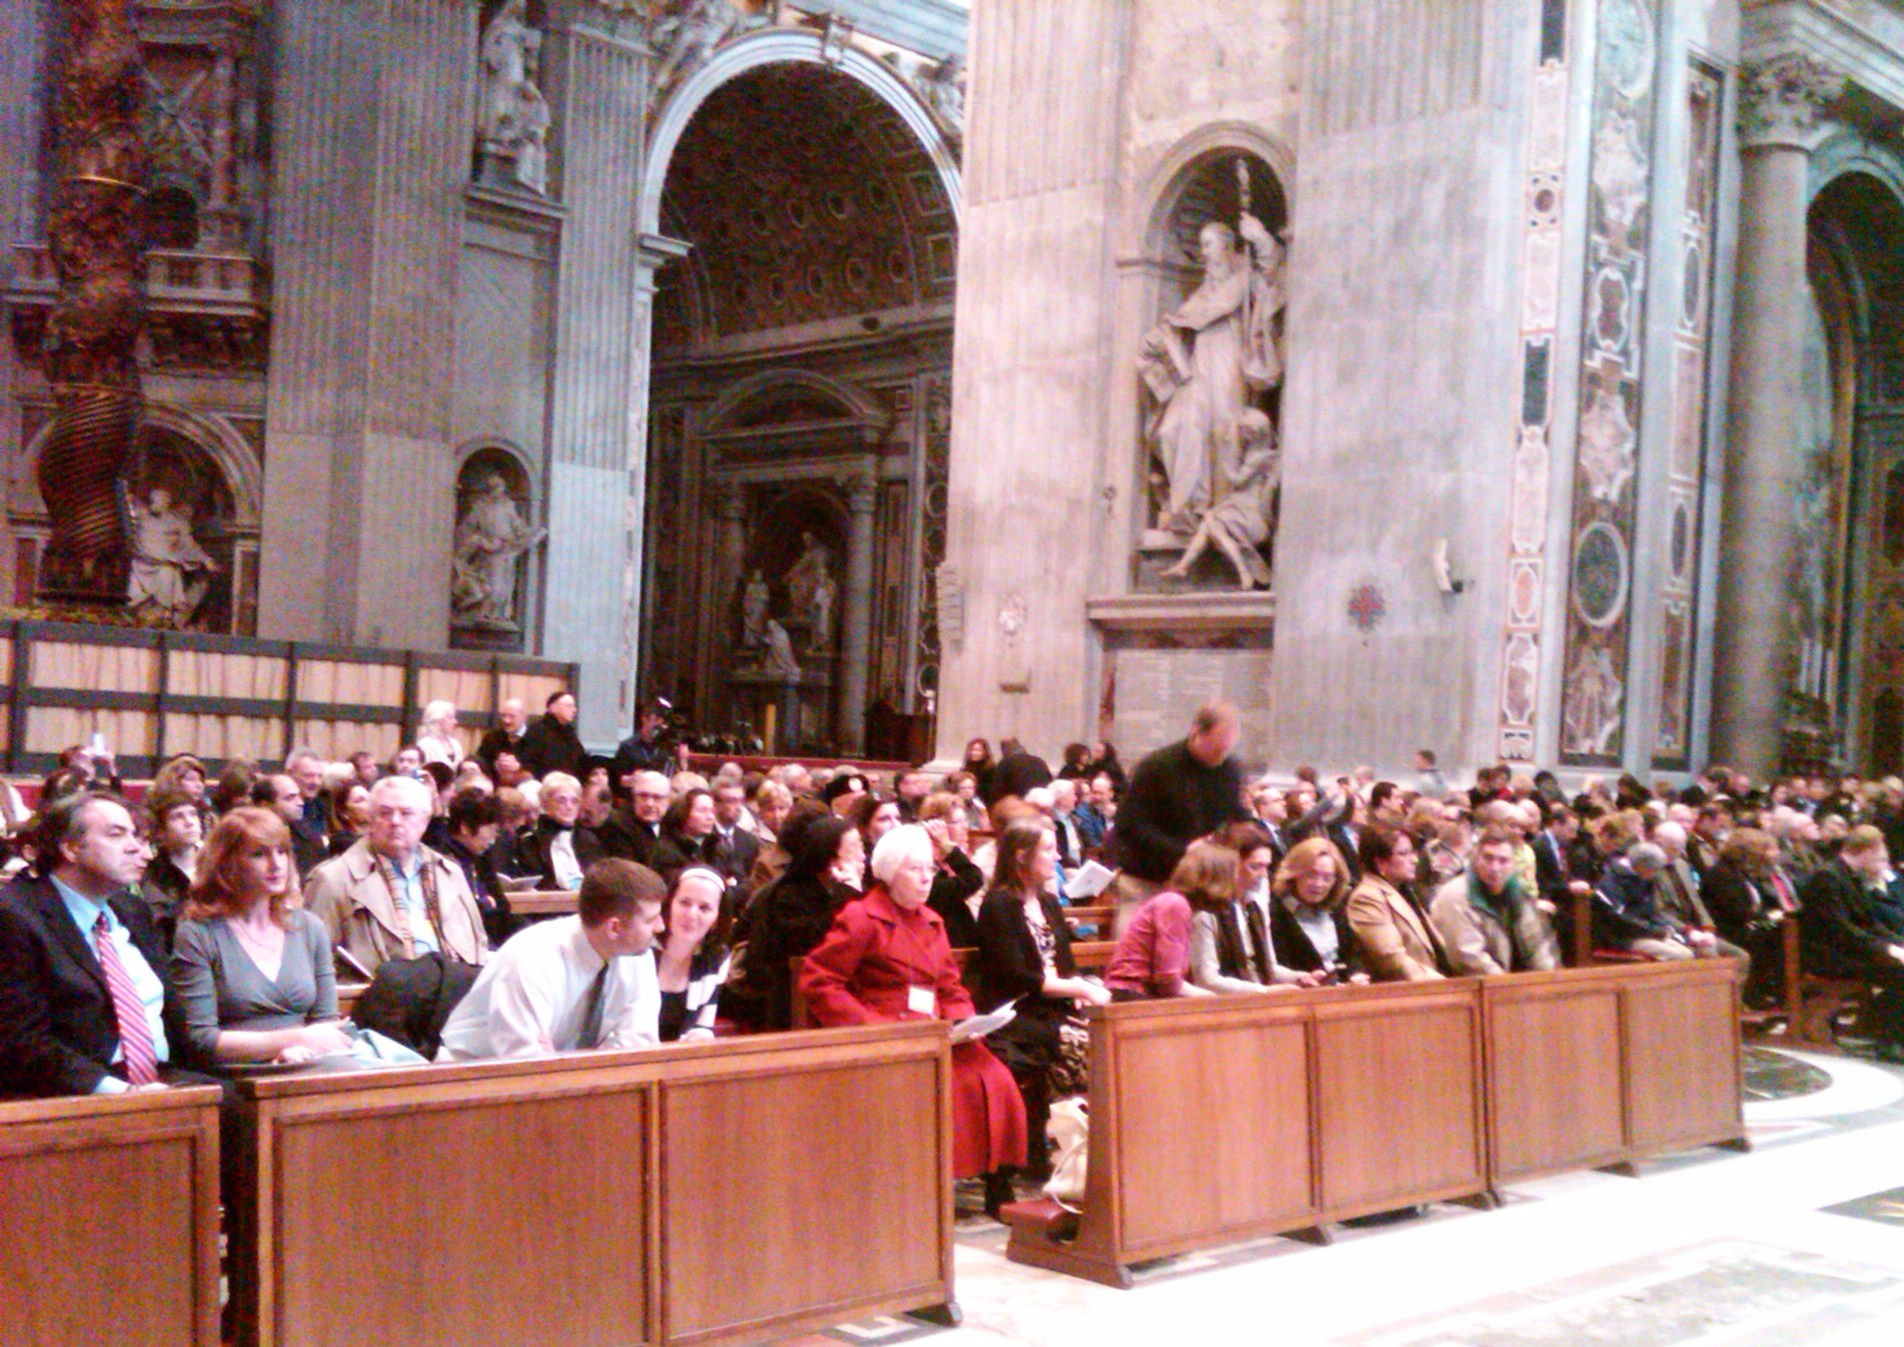 Mass at St Peter's Basilica 